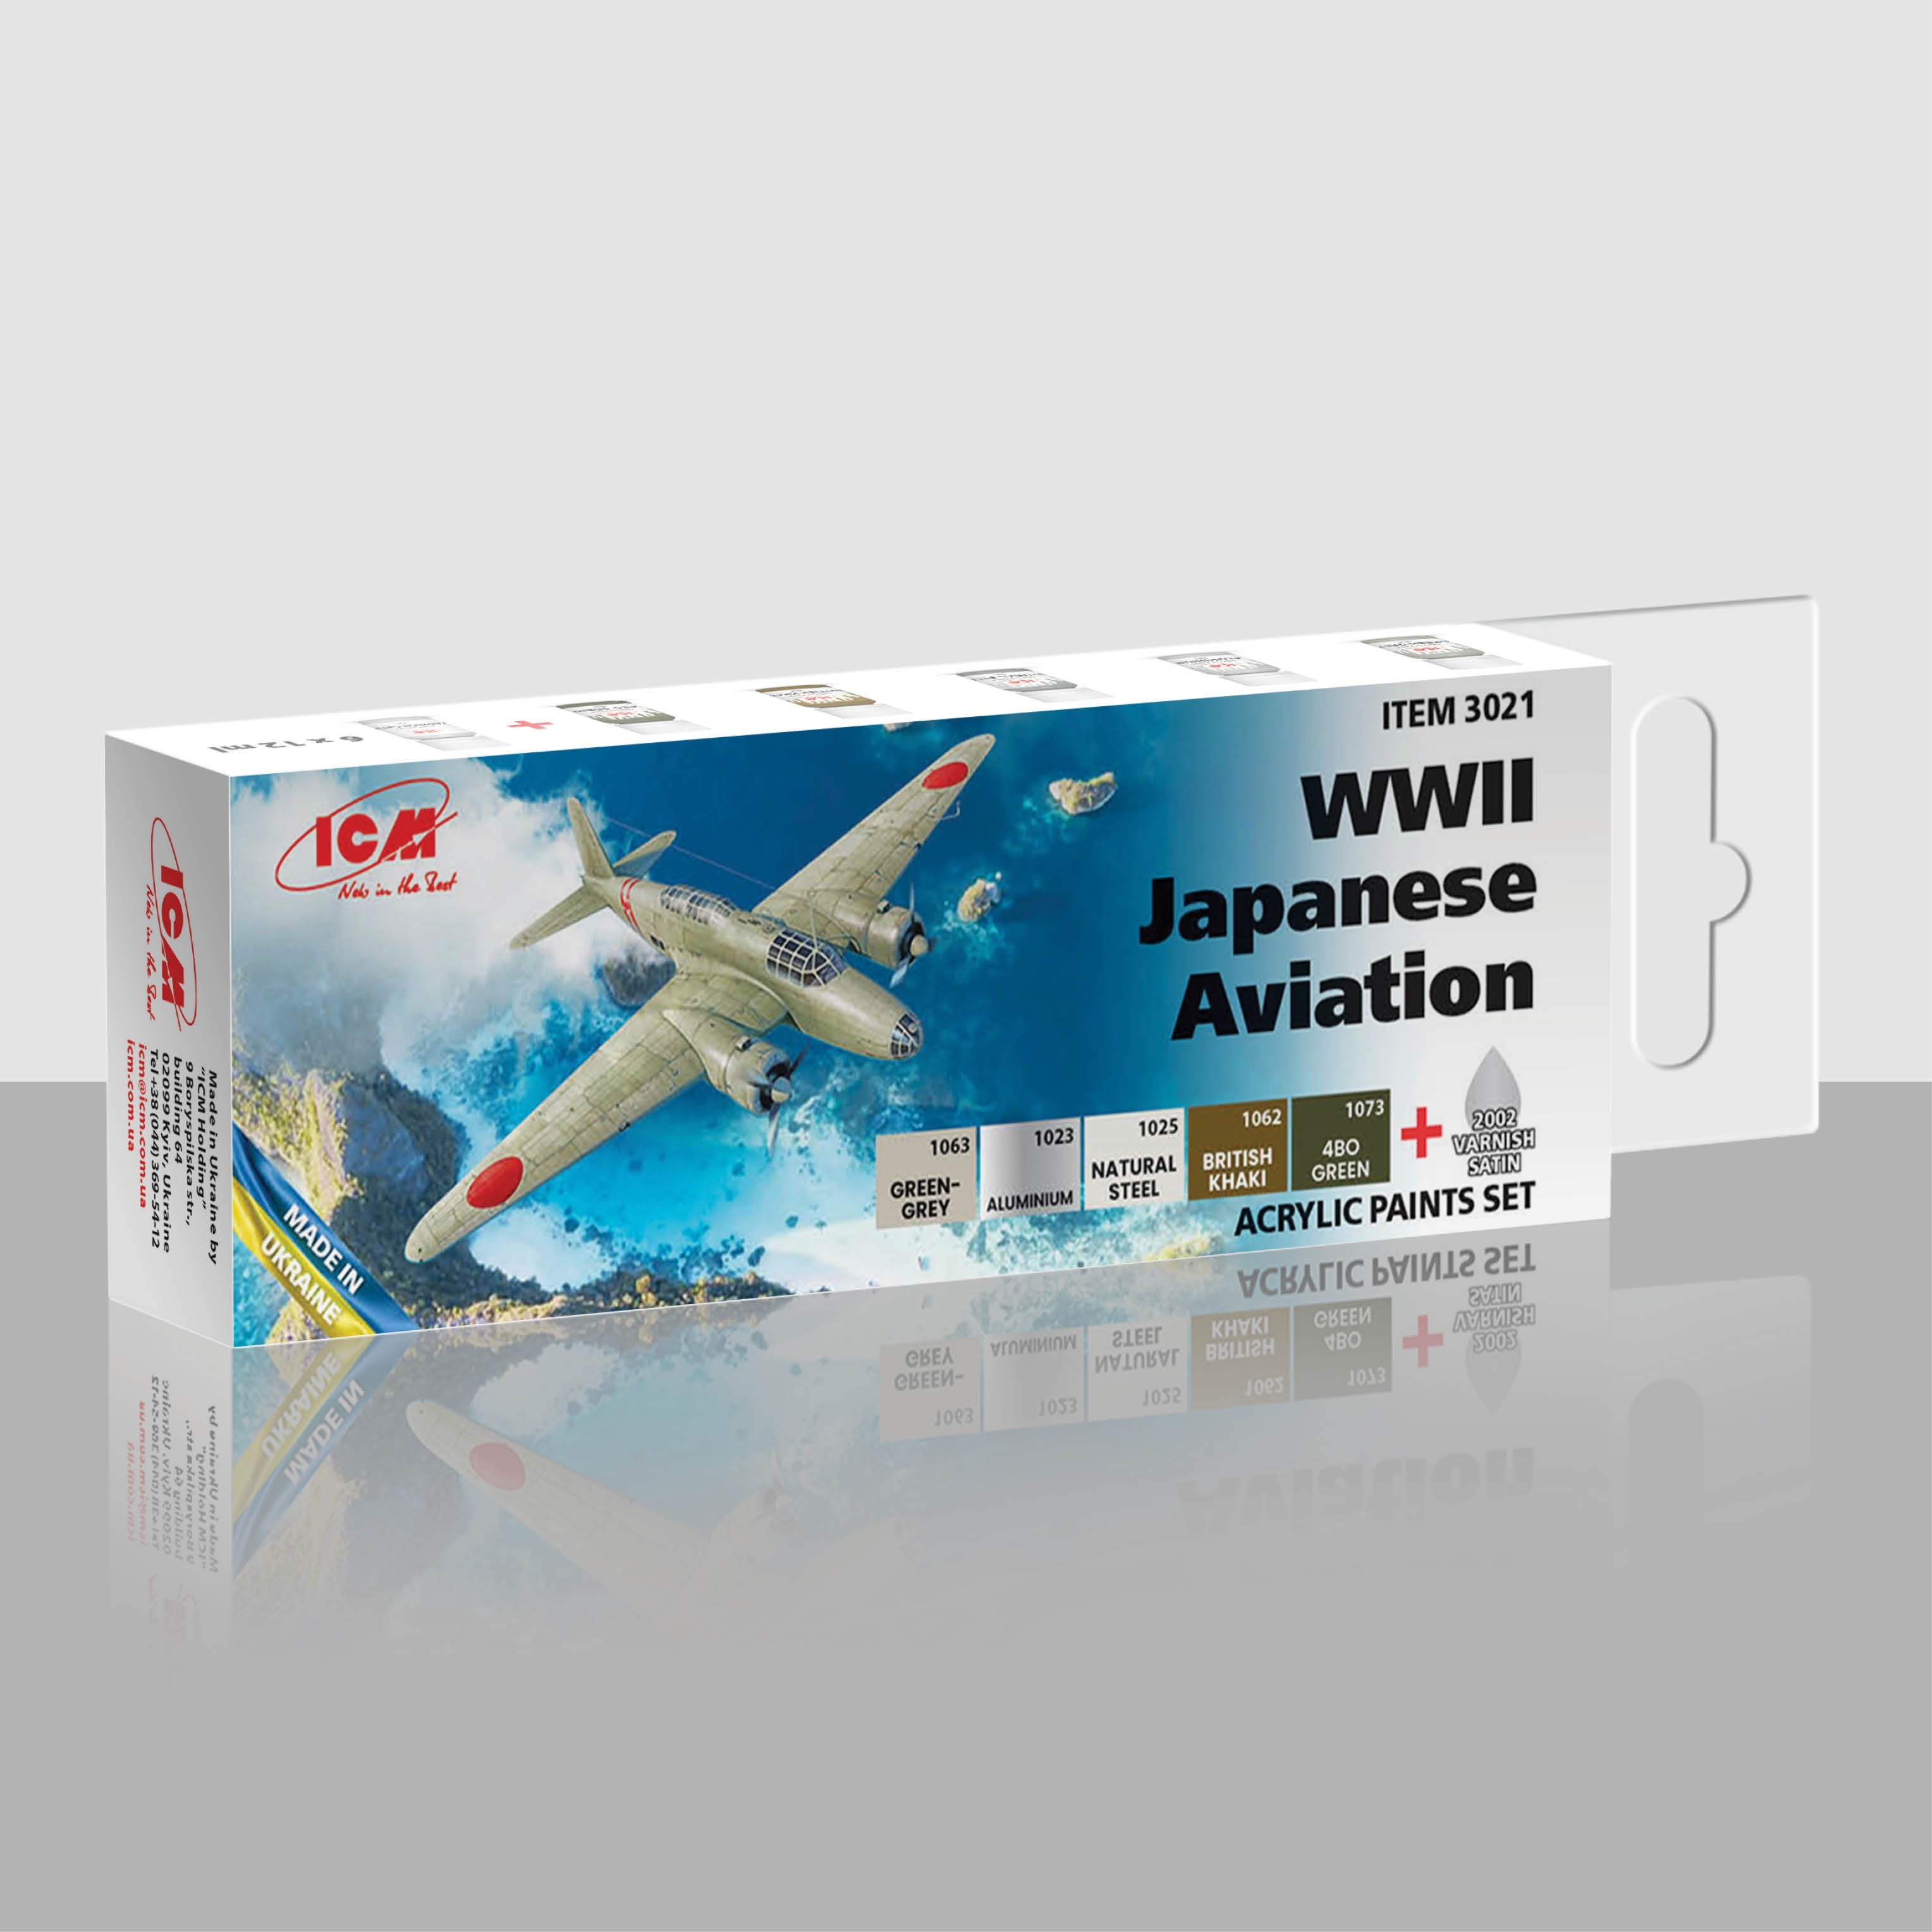 6. Acrylic Paint Set for WWII Japanese Aviation - #3021